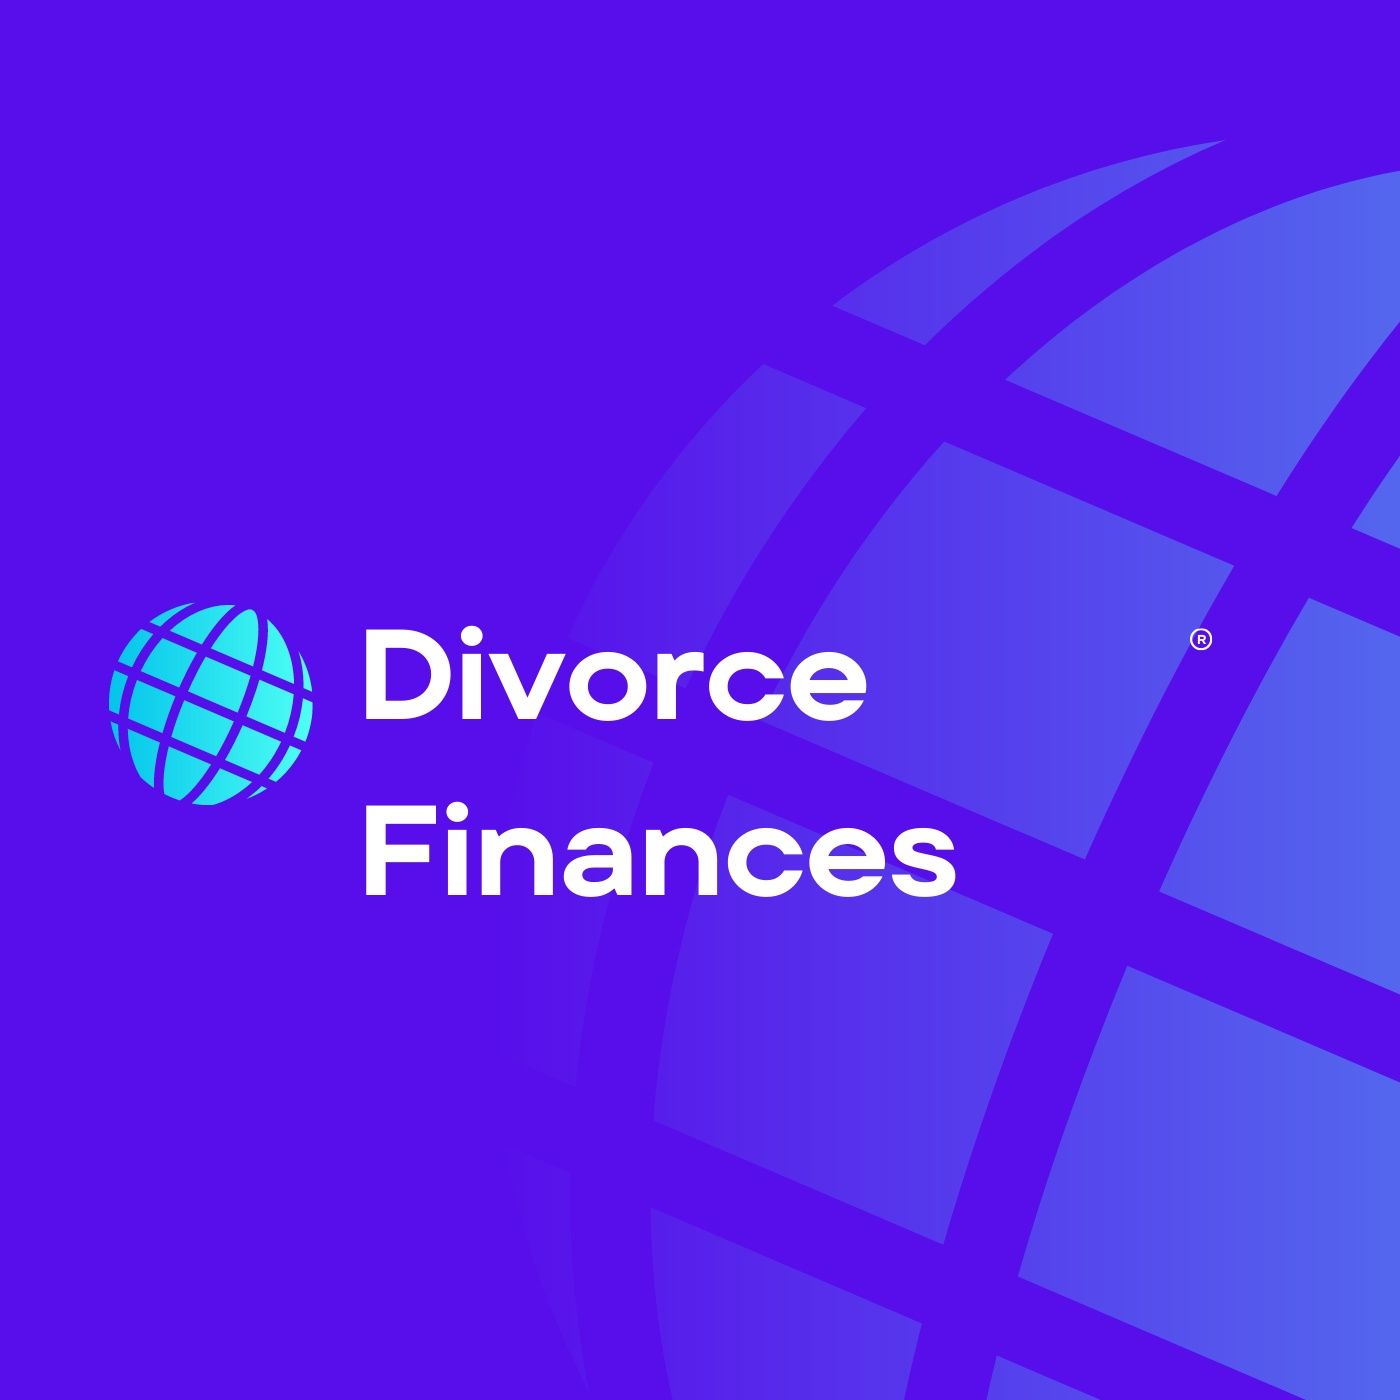 Divorce Finances